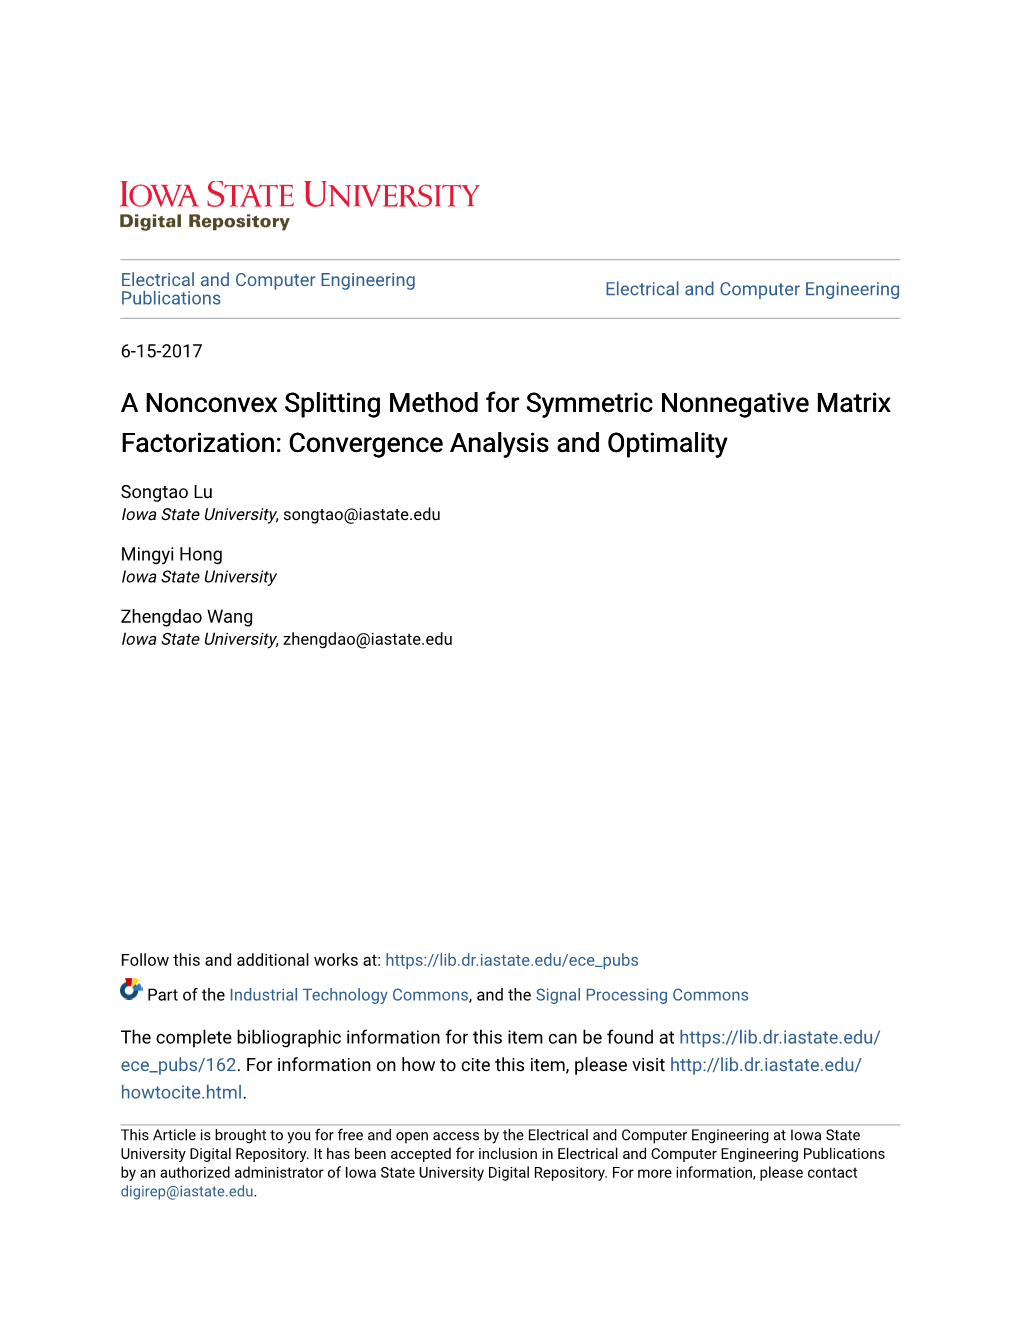 A Nonconvex Splitting Method for Symmetric Nonnegative Matrix Factorization: Convergence Analysis and Optimality